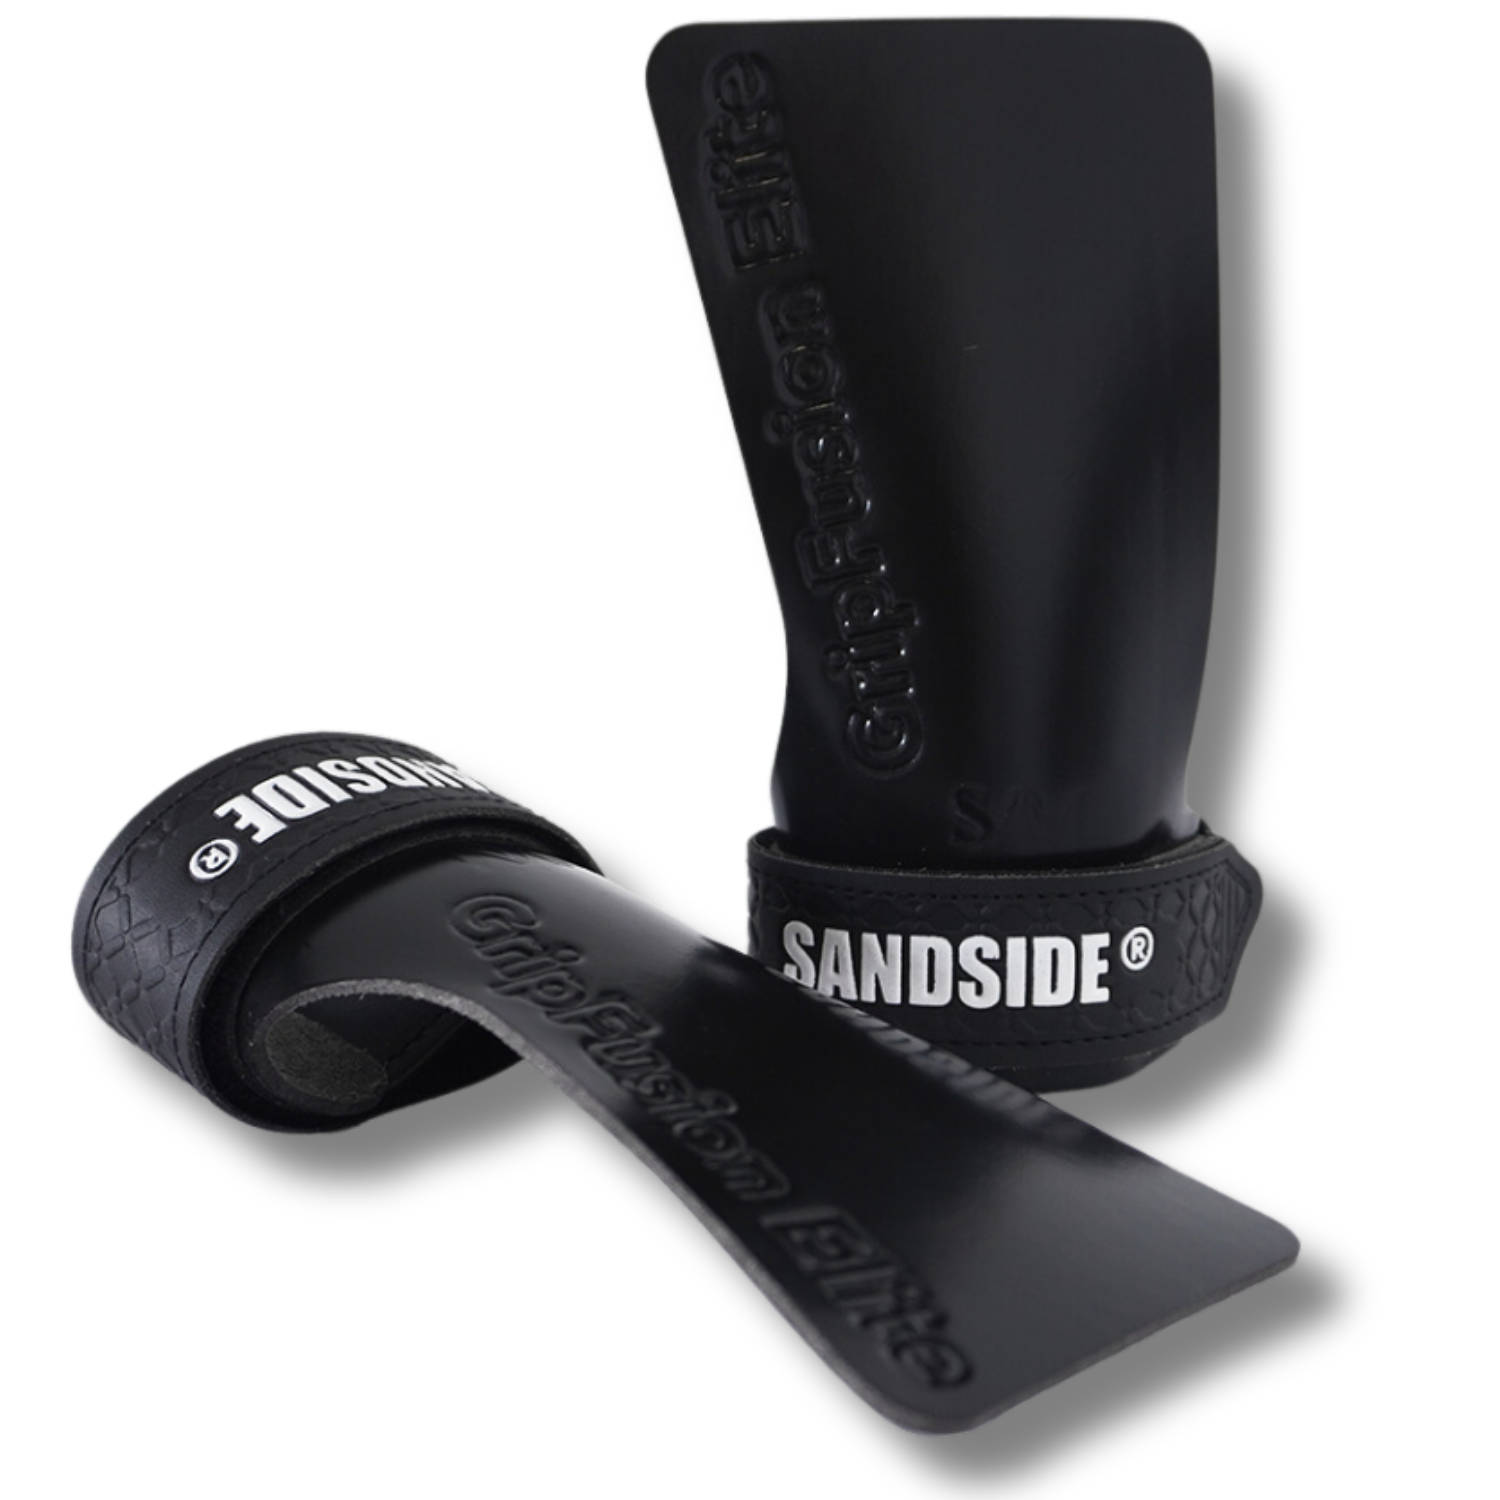 Sandside CrossFit Grips Elite 2.0 - Sticky Hand Grips - No Chalk - Fitness Handschoenen - Fingerless Grips - Pure Black L/XL